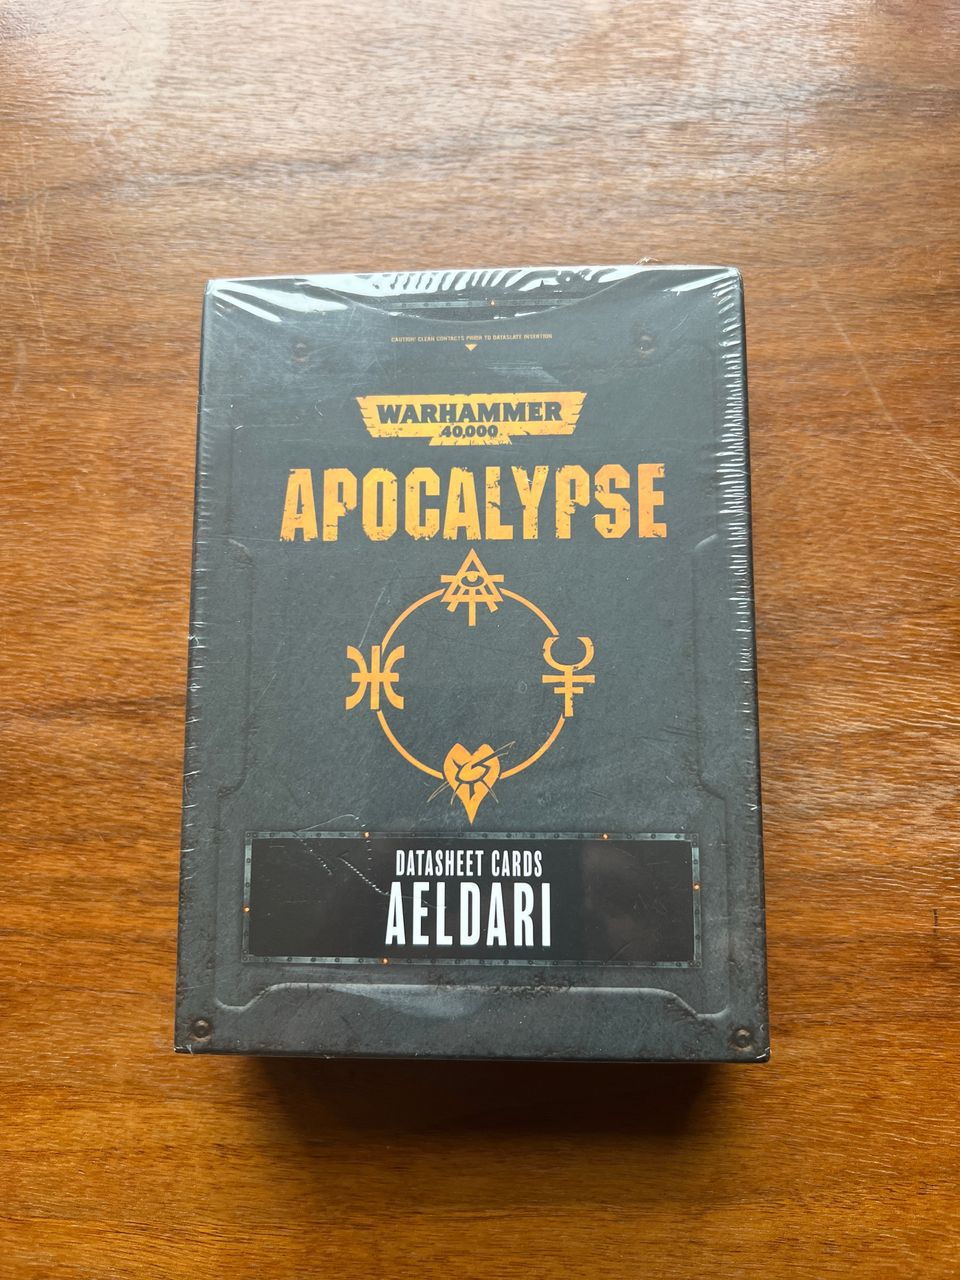 Warhammer 40k Apocalypse Aeldari datasheet cards paketti